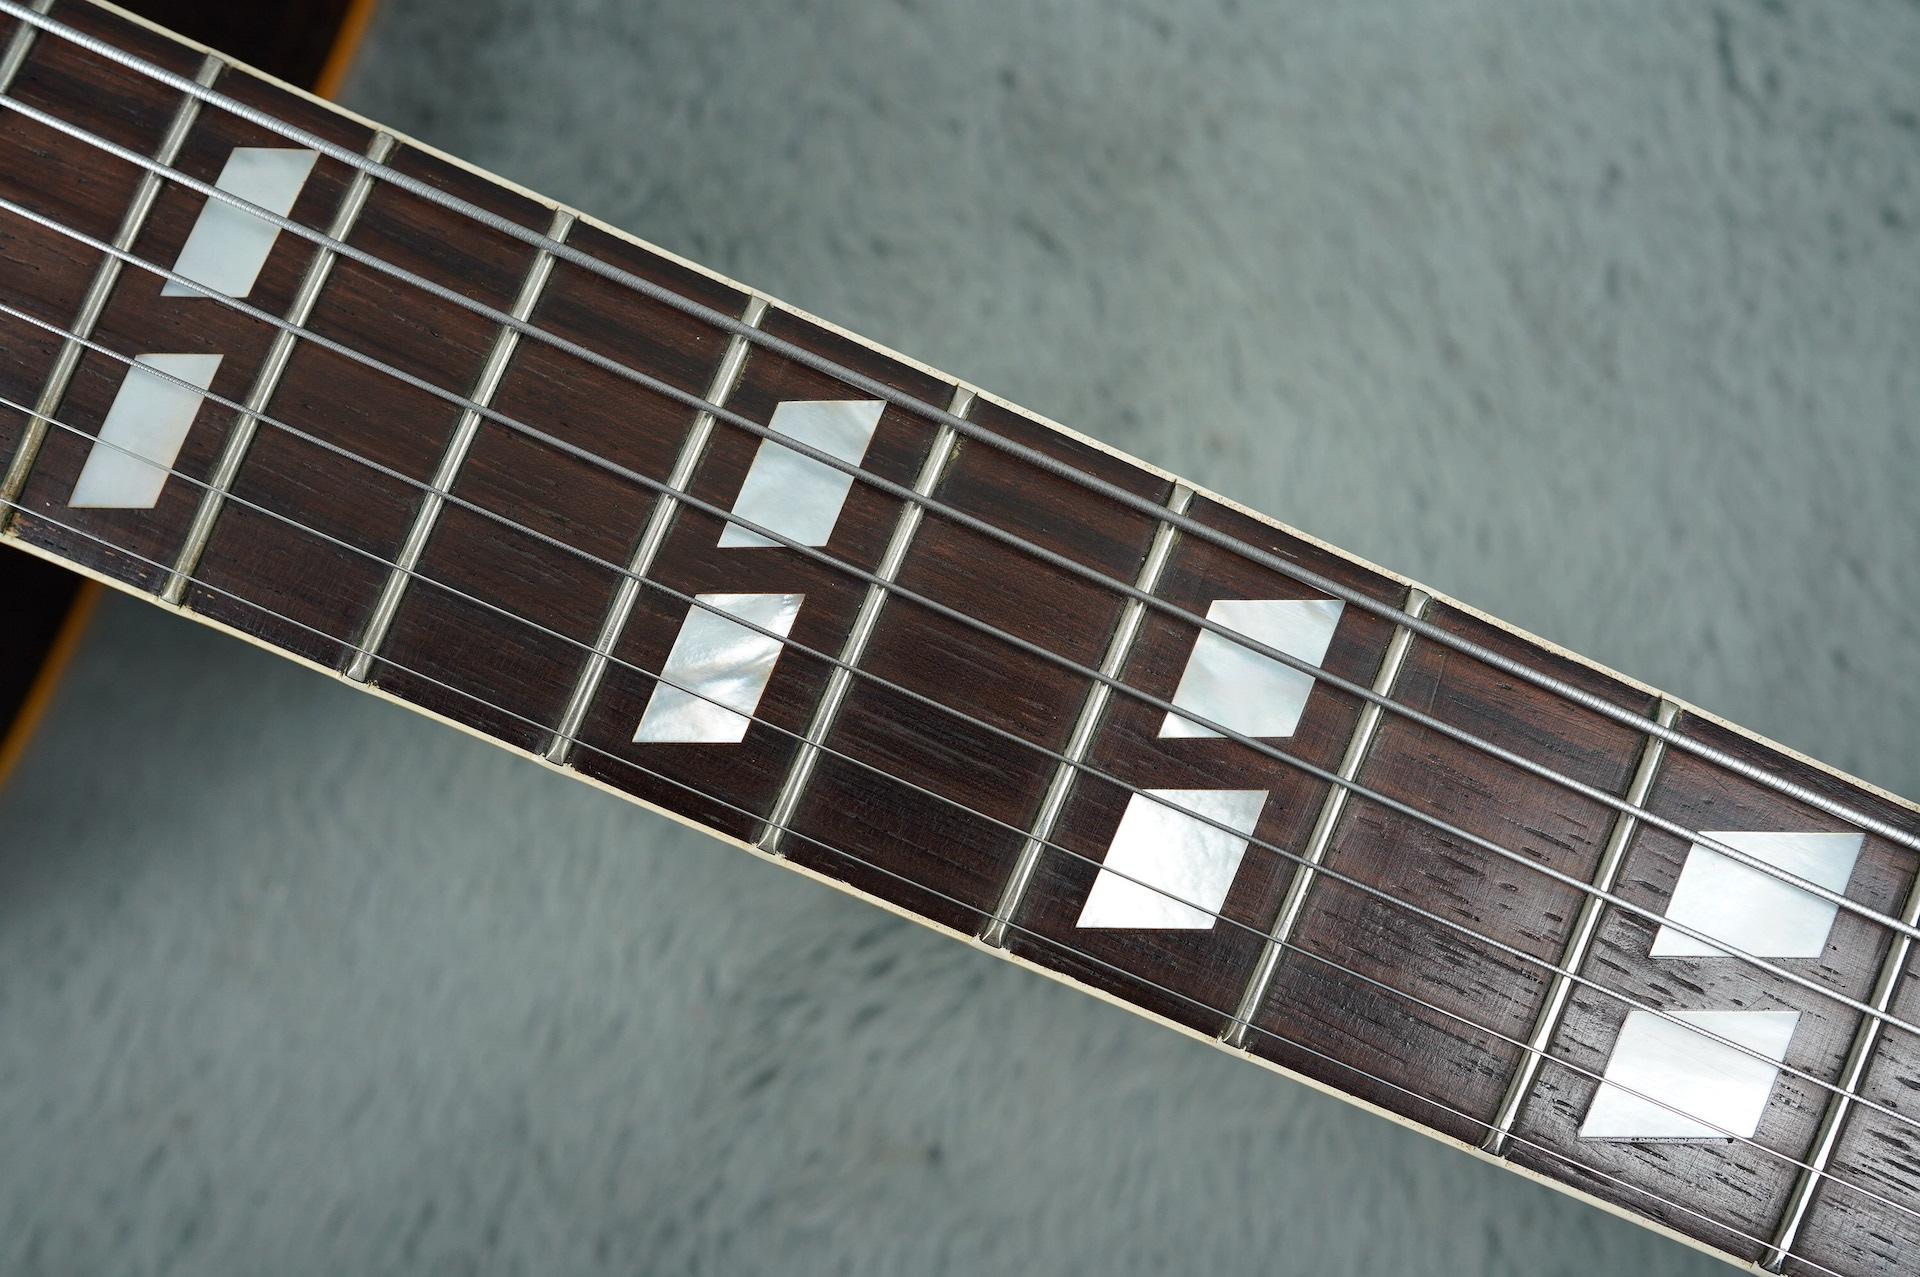 1946 Gibson ES-300 + OHSC